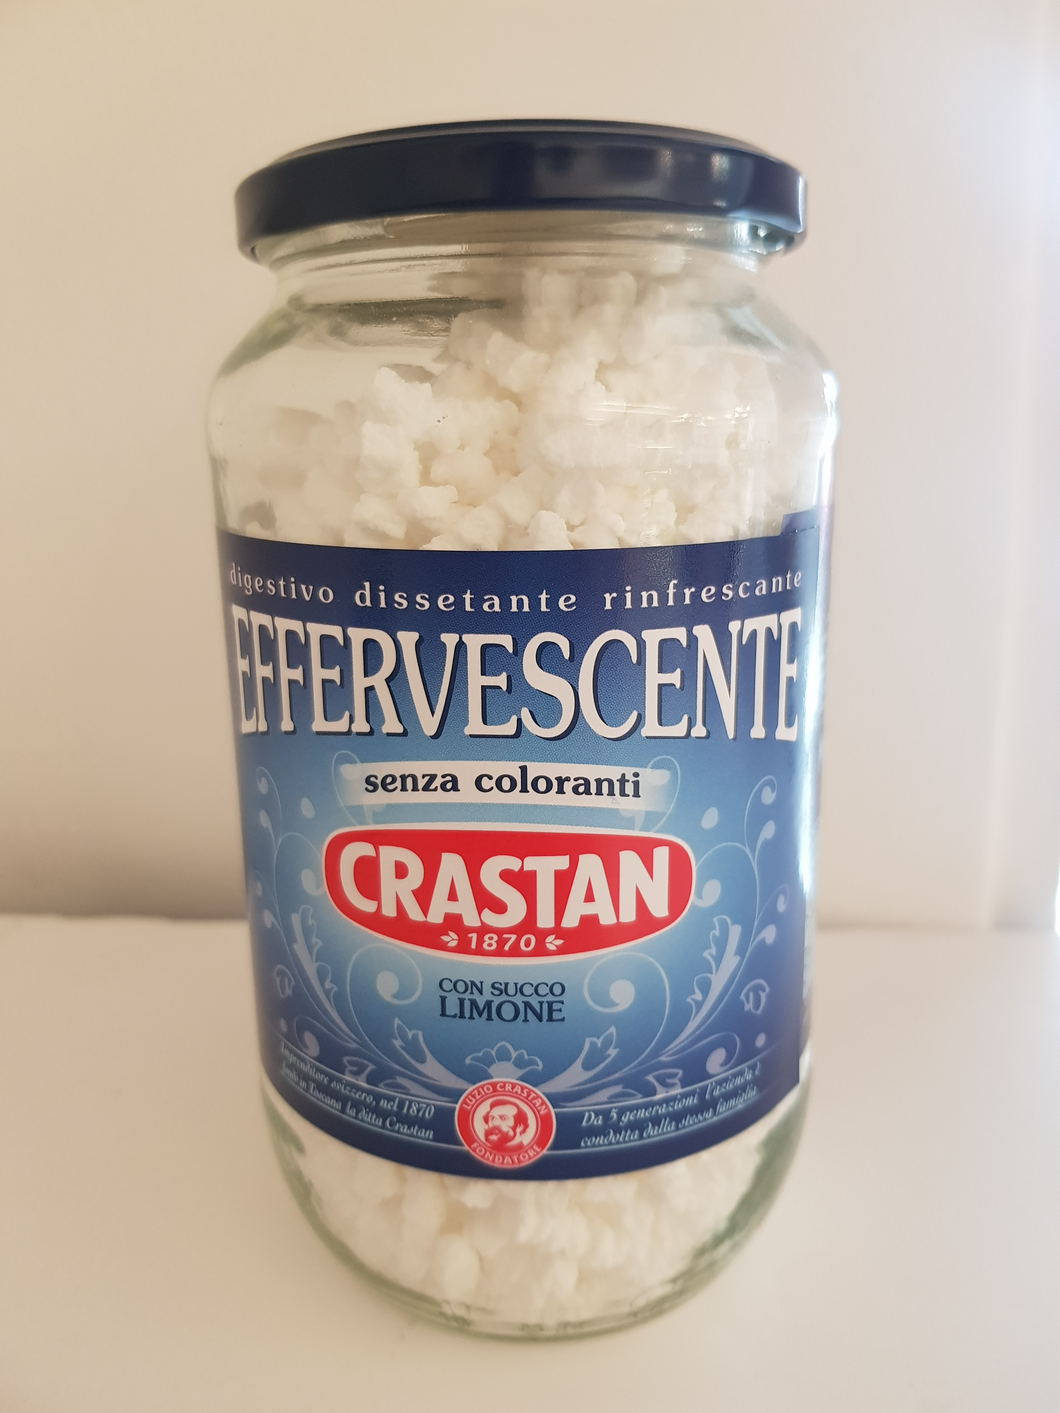 Crastan - Effervescente (Digestive Aid)